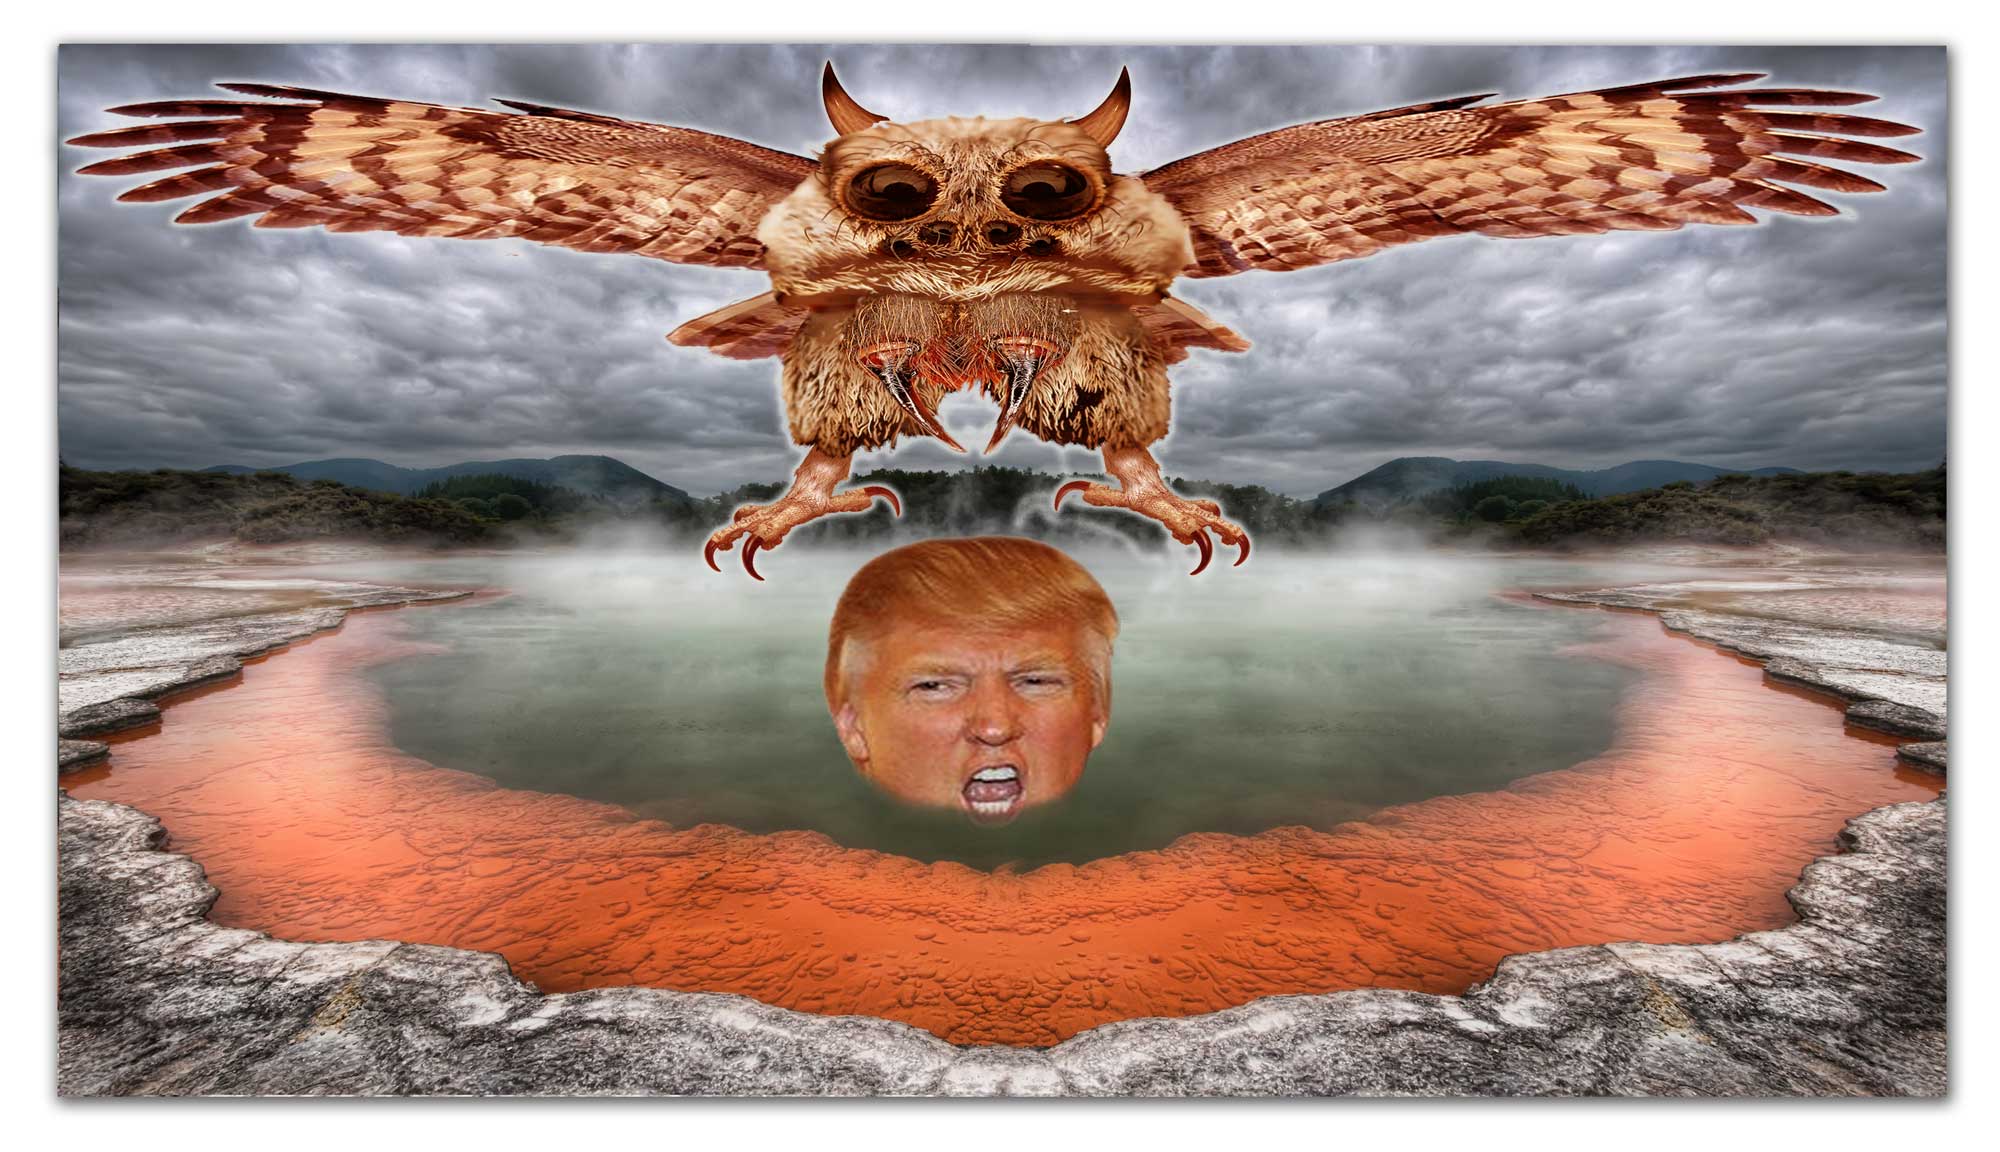 Evil Flying Creature Attacks Trump